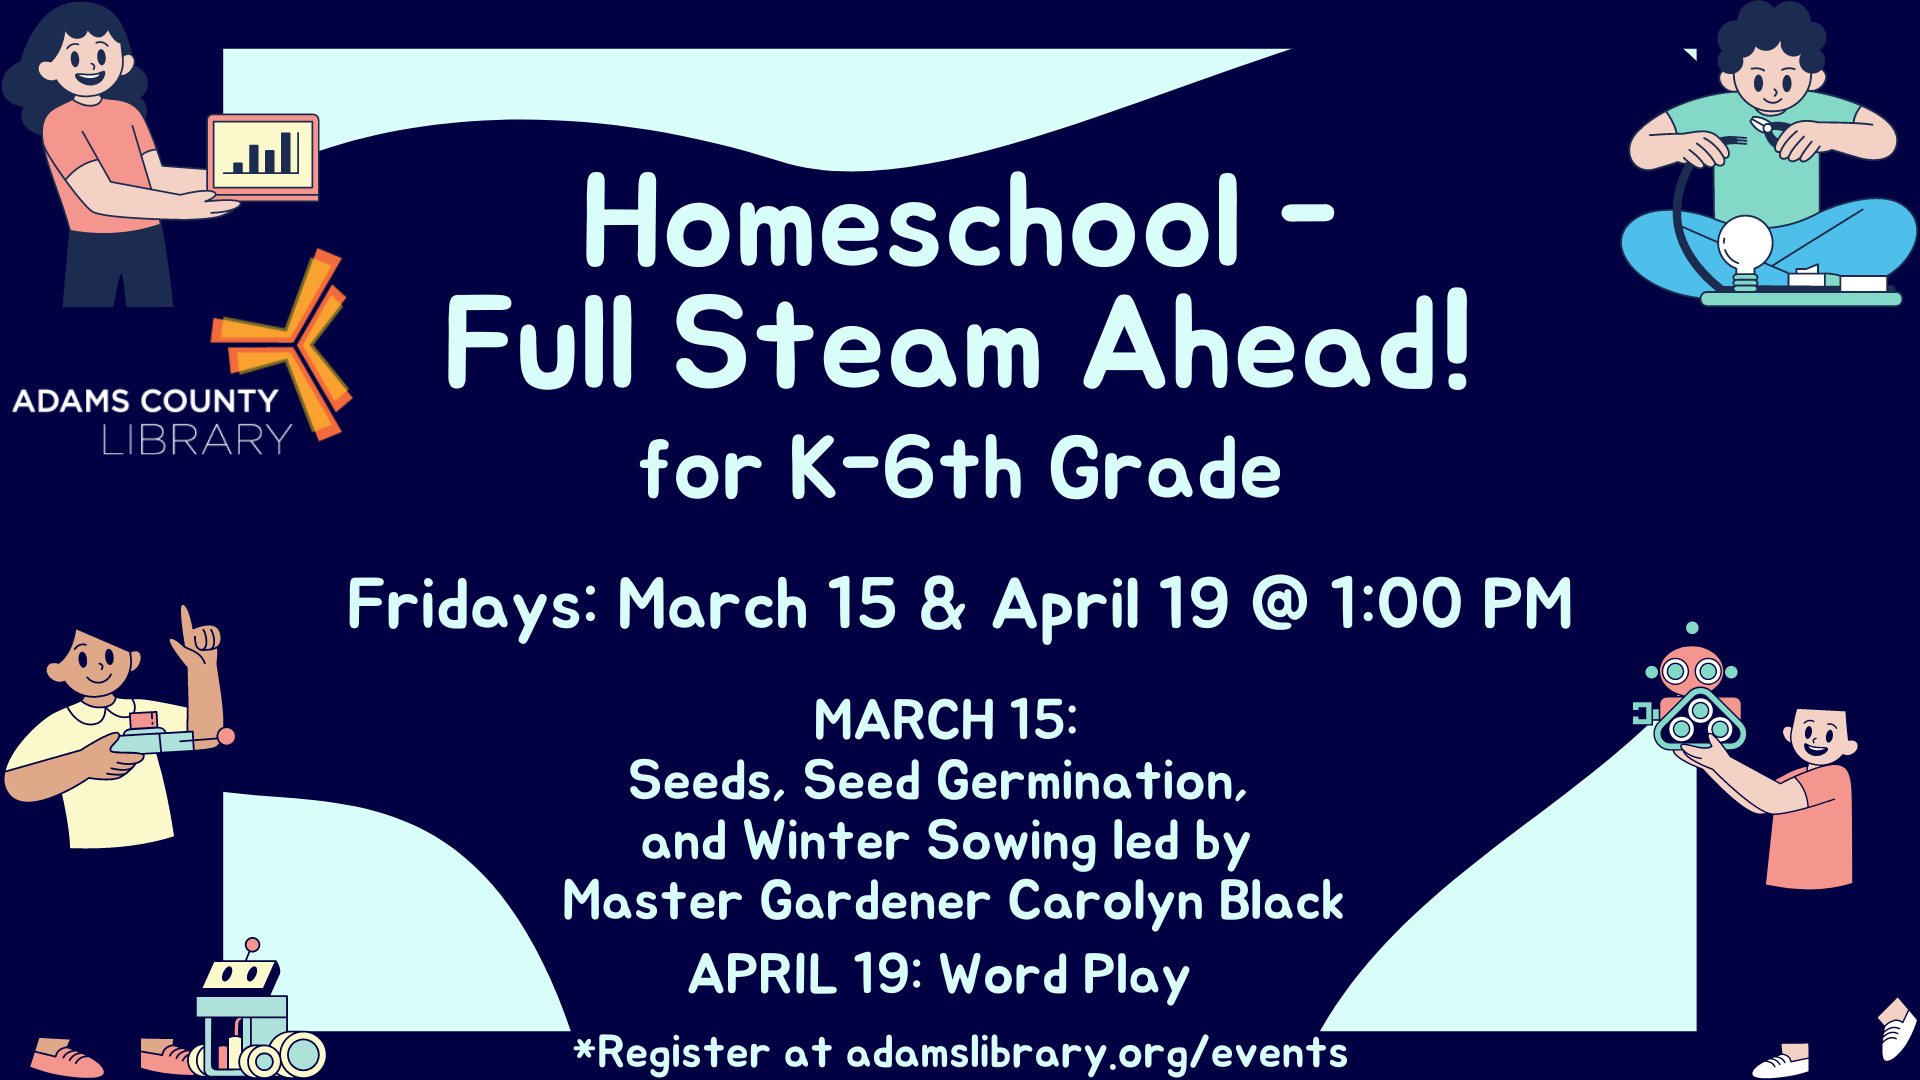 Homeschool - Full Steam Ahead! for K-6th Grade